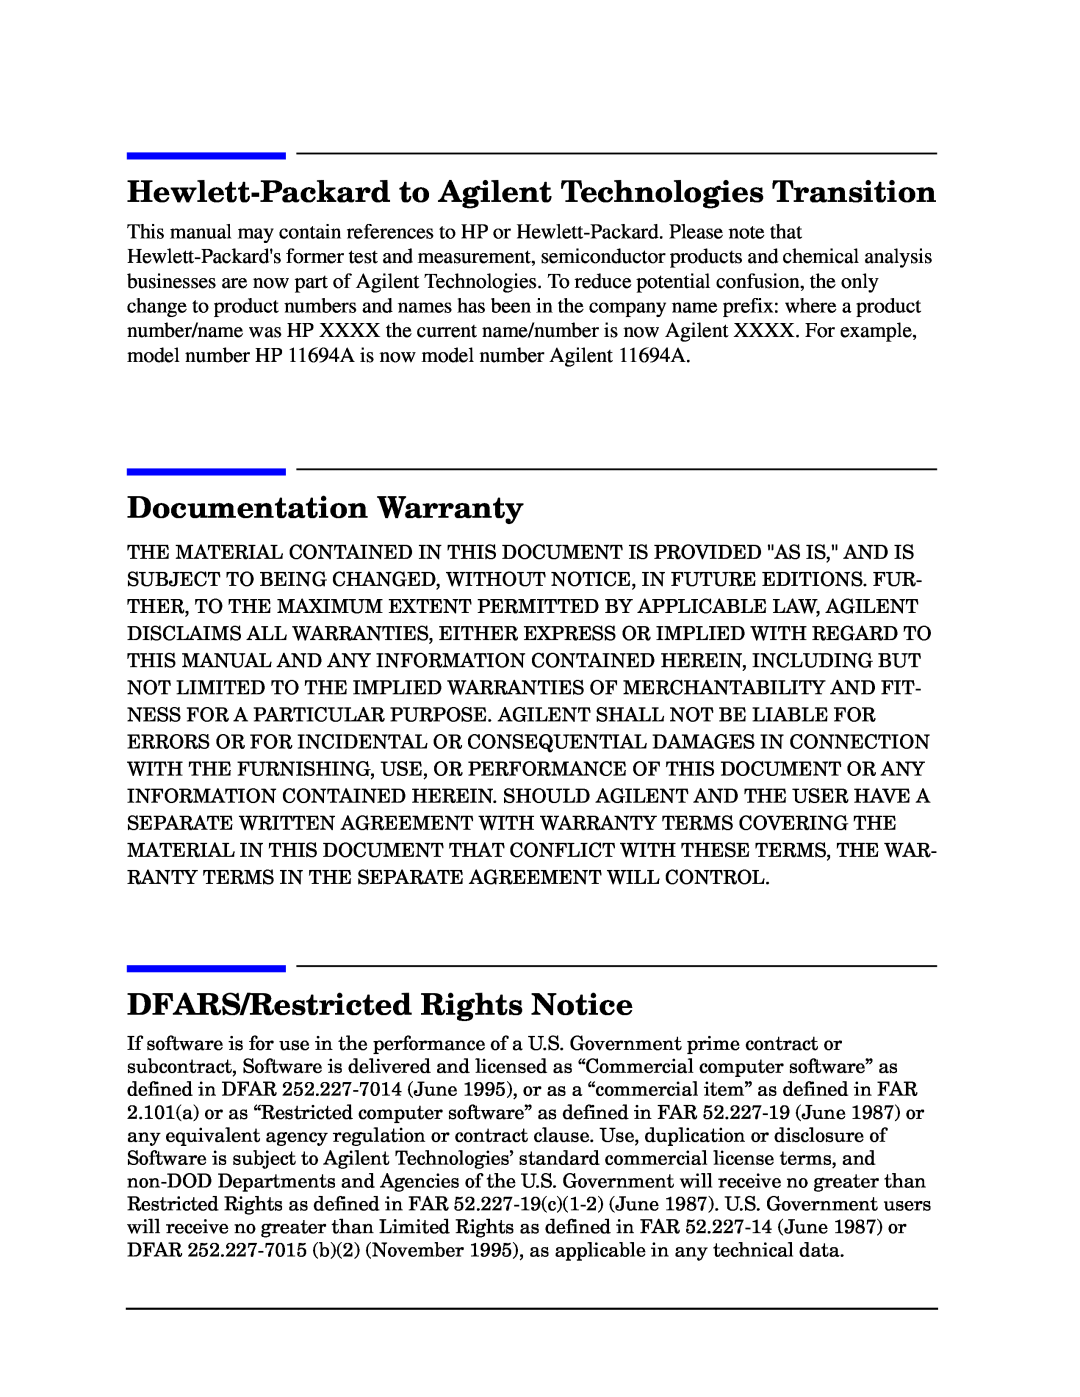 Agilent Technologies 11694A service manual Hewlett-Packard to Agilent Technologies Transition, Documentation Warranty 